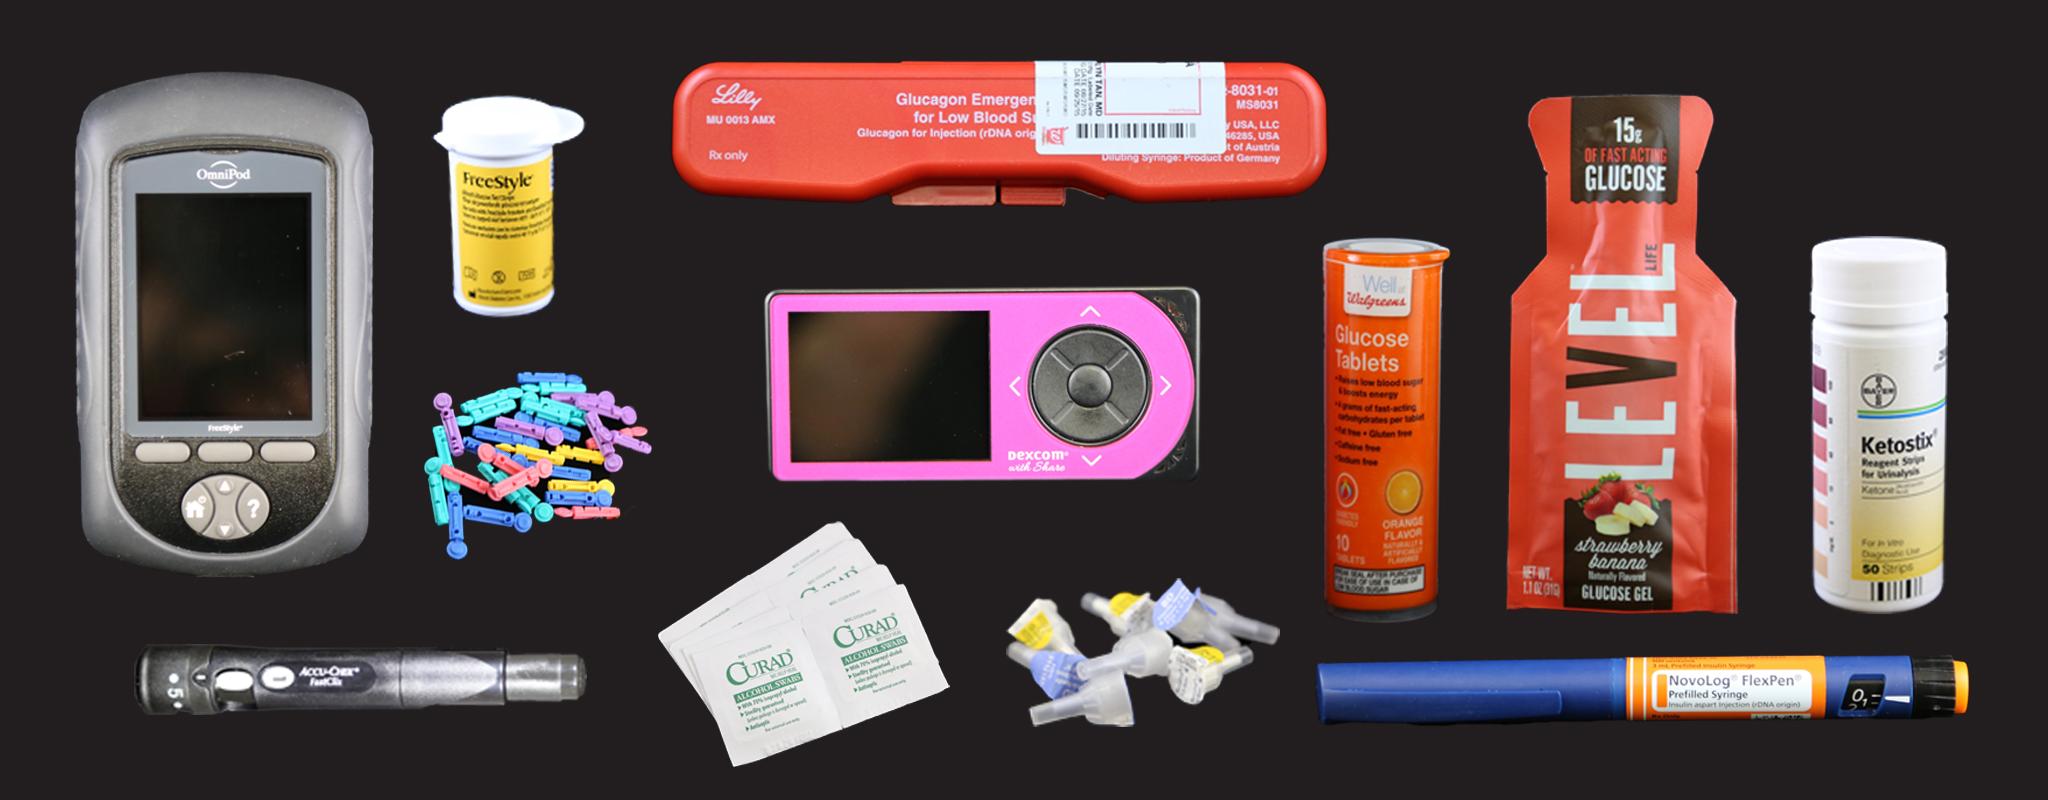 Daily DiabetesCare Kit